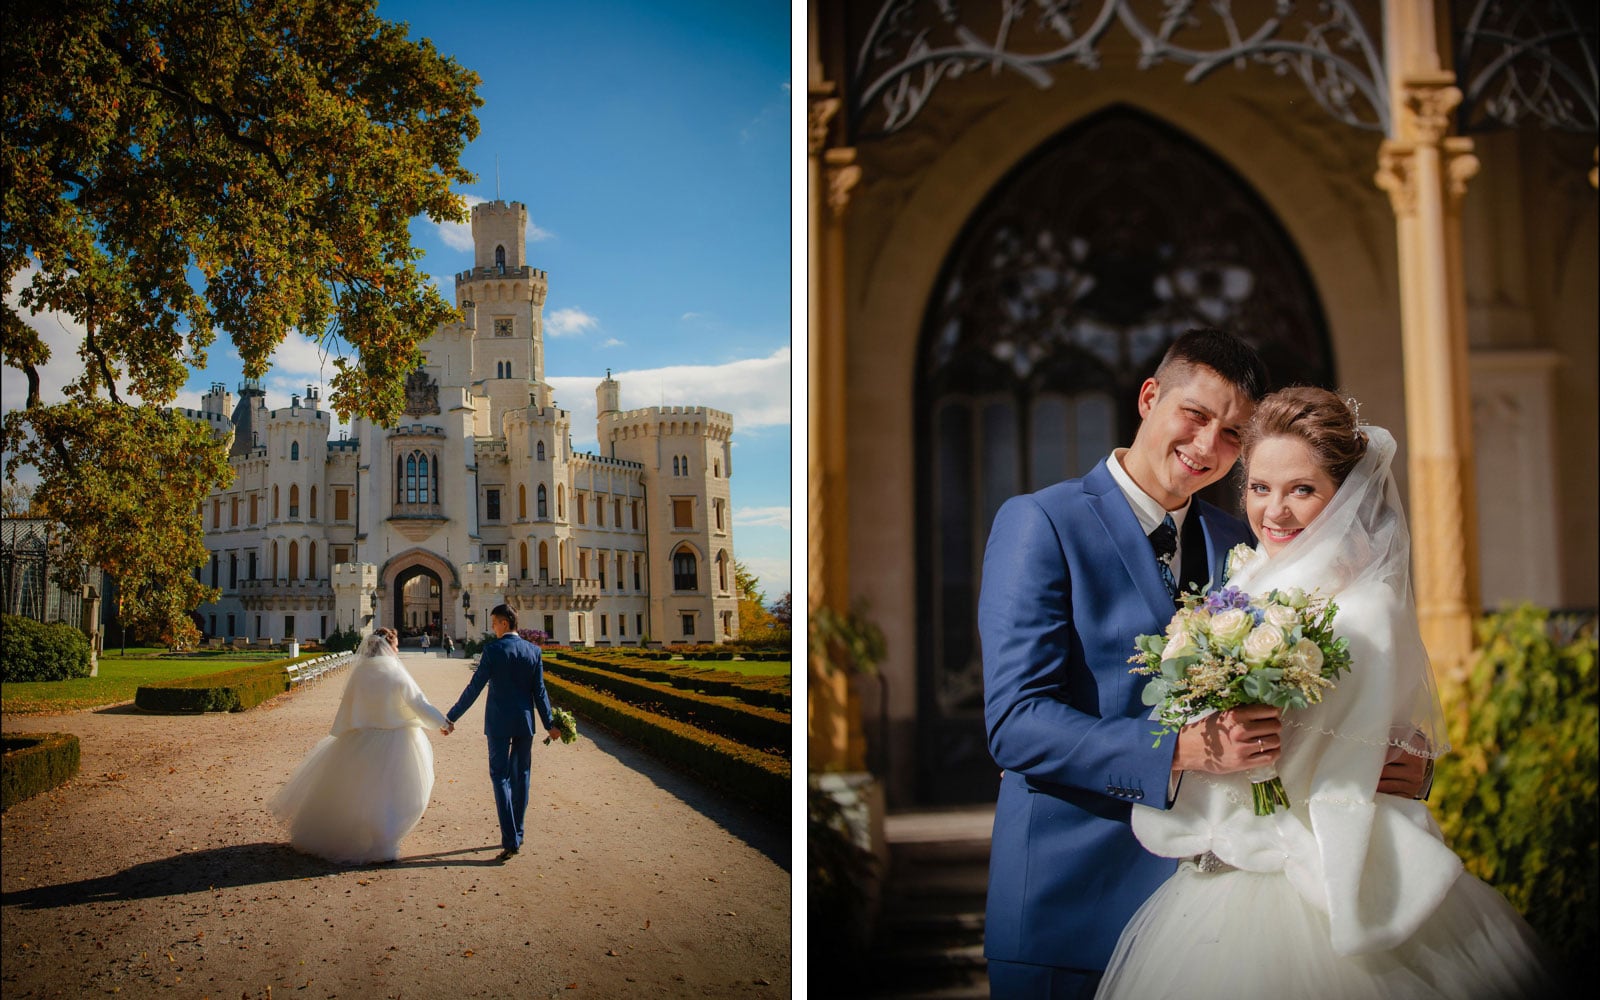 Castle Hluboka nad Vltavou weddings / O & A / wedding photography